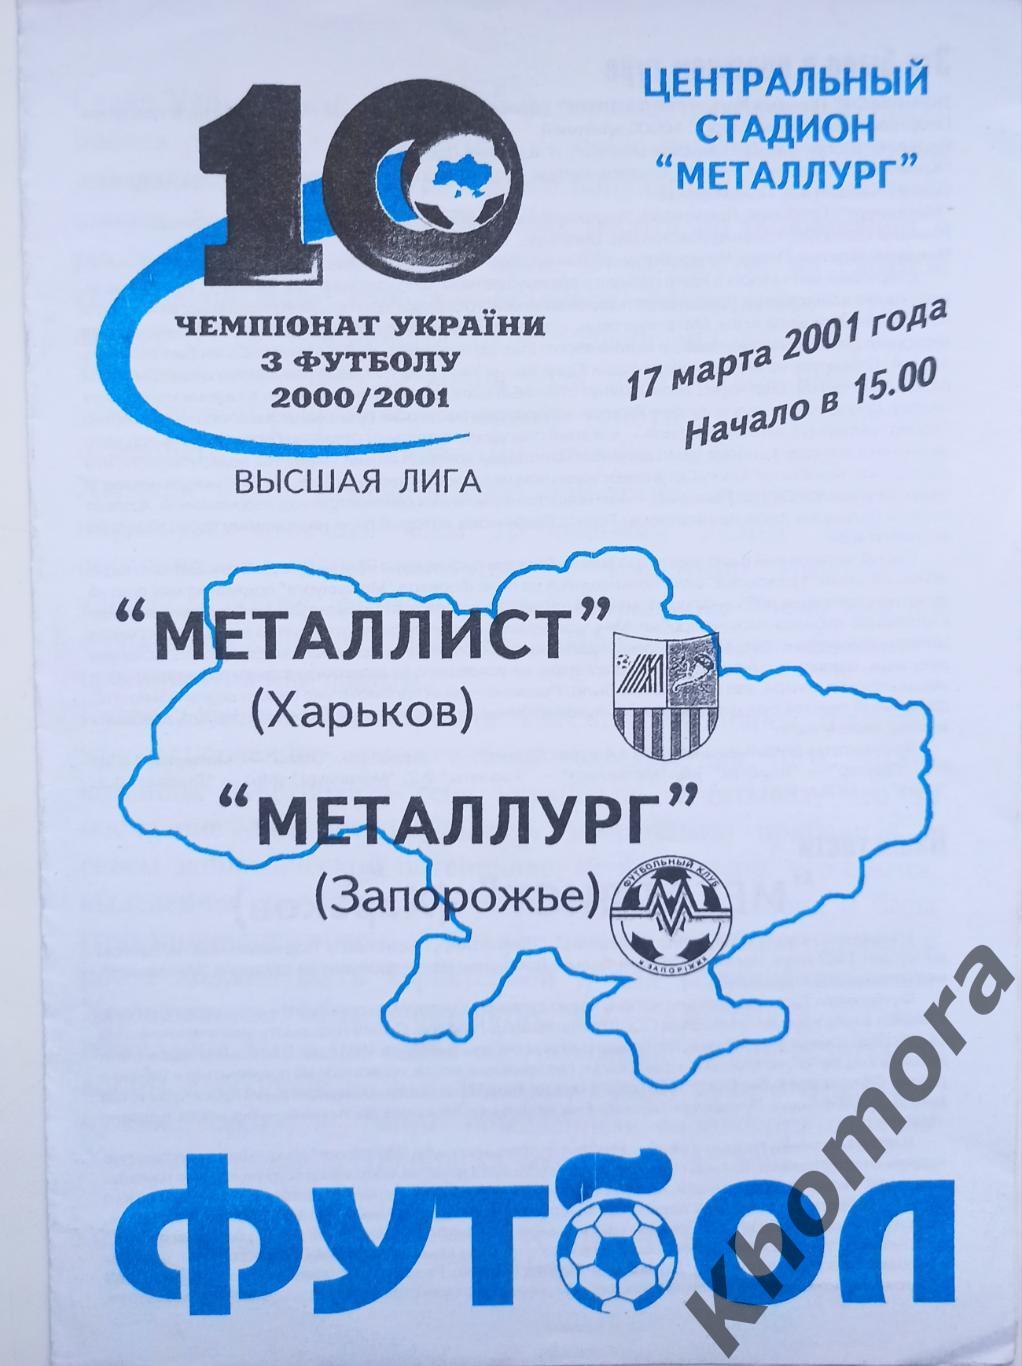 Металлург (Запорожье) - Металлист (Харьков) 17.03.2001 - официальная программа